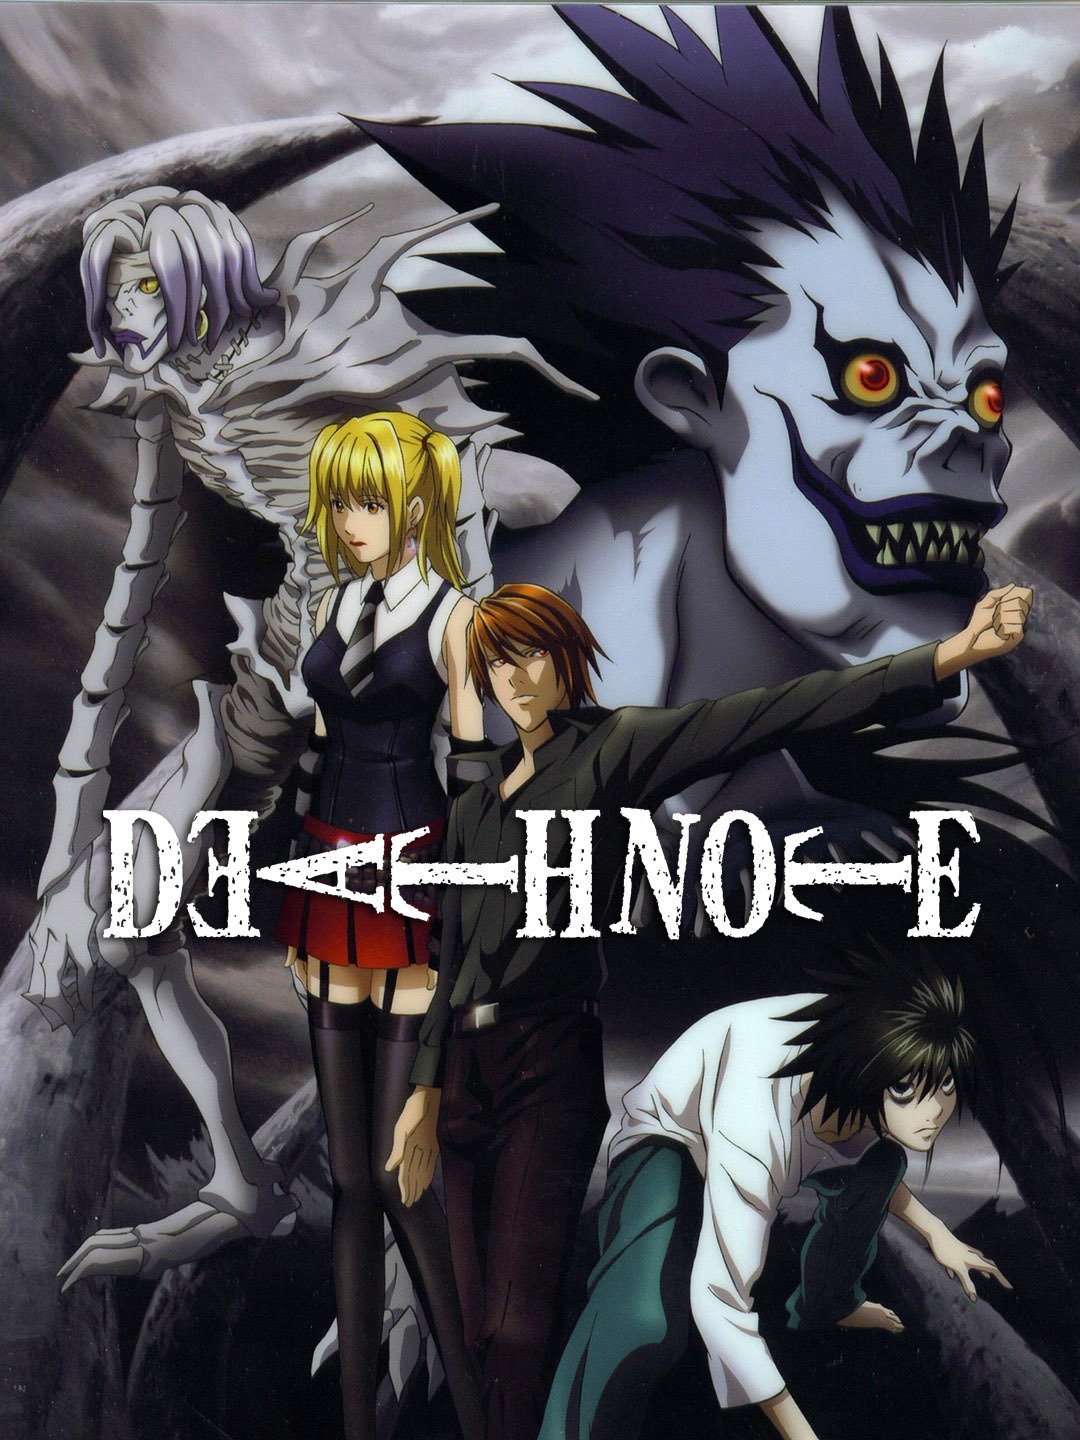 Death Note TV Series 20062007  IMDb